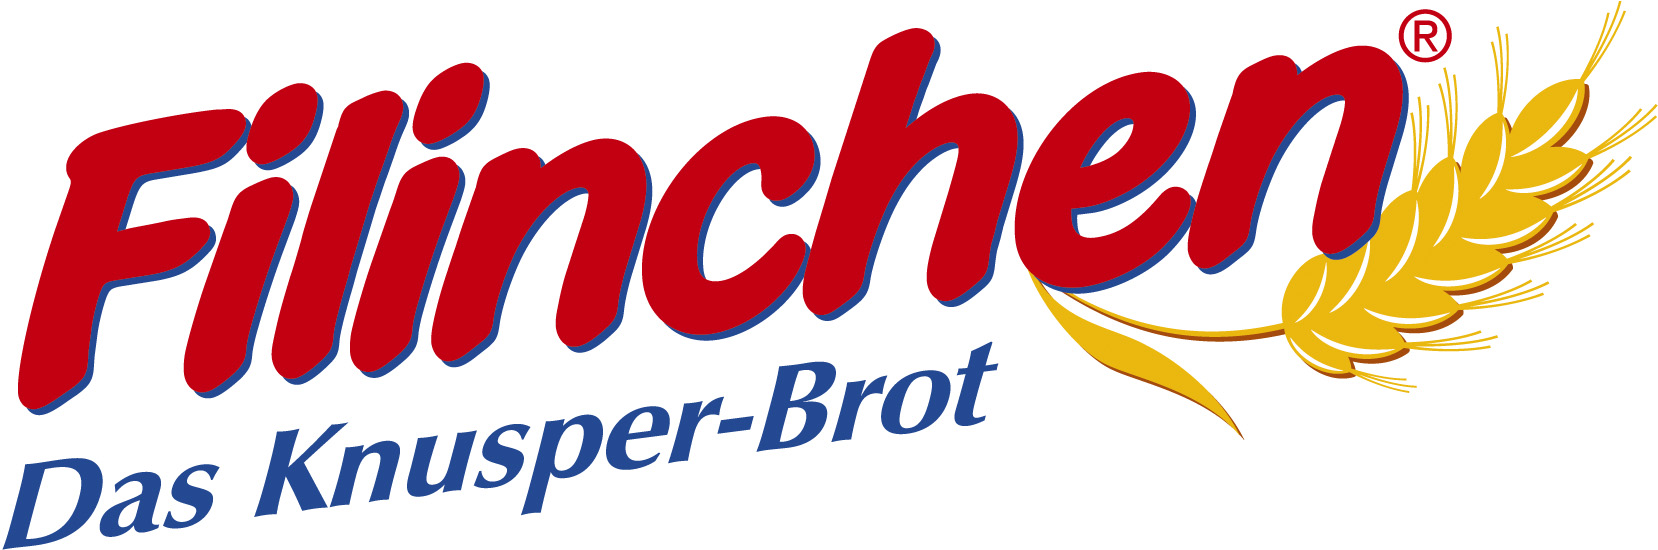 Filinchen Logo 2011